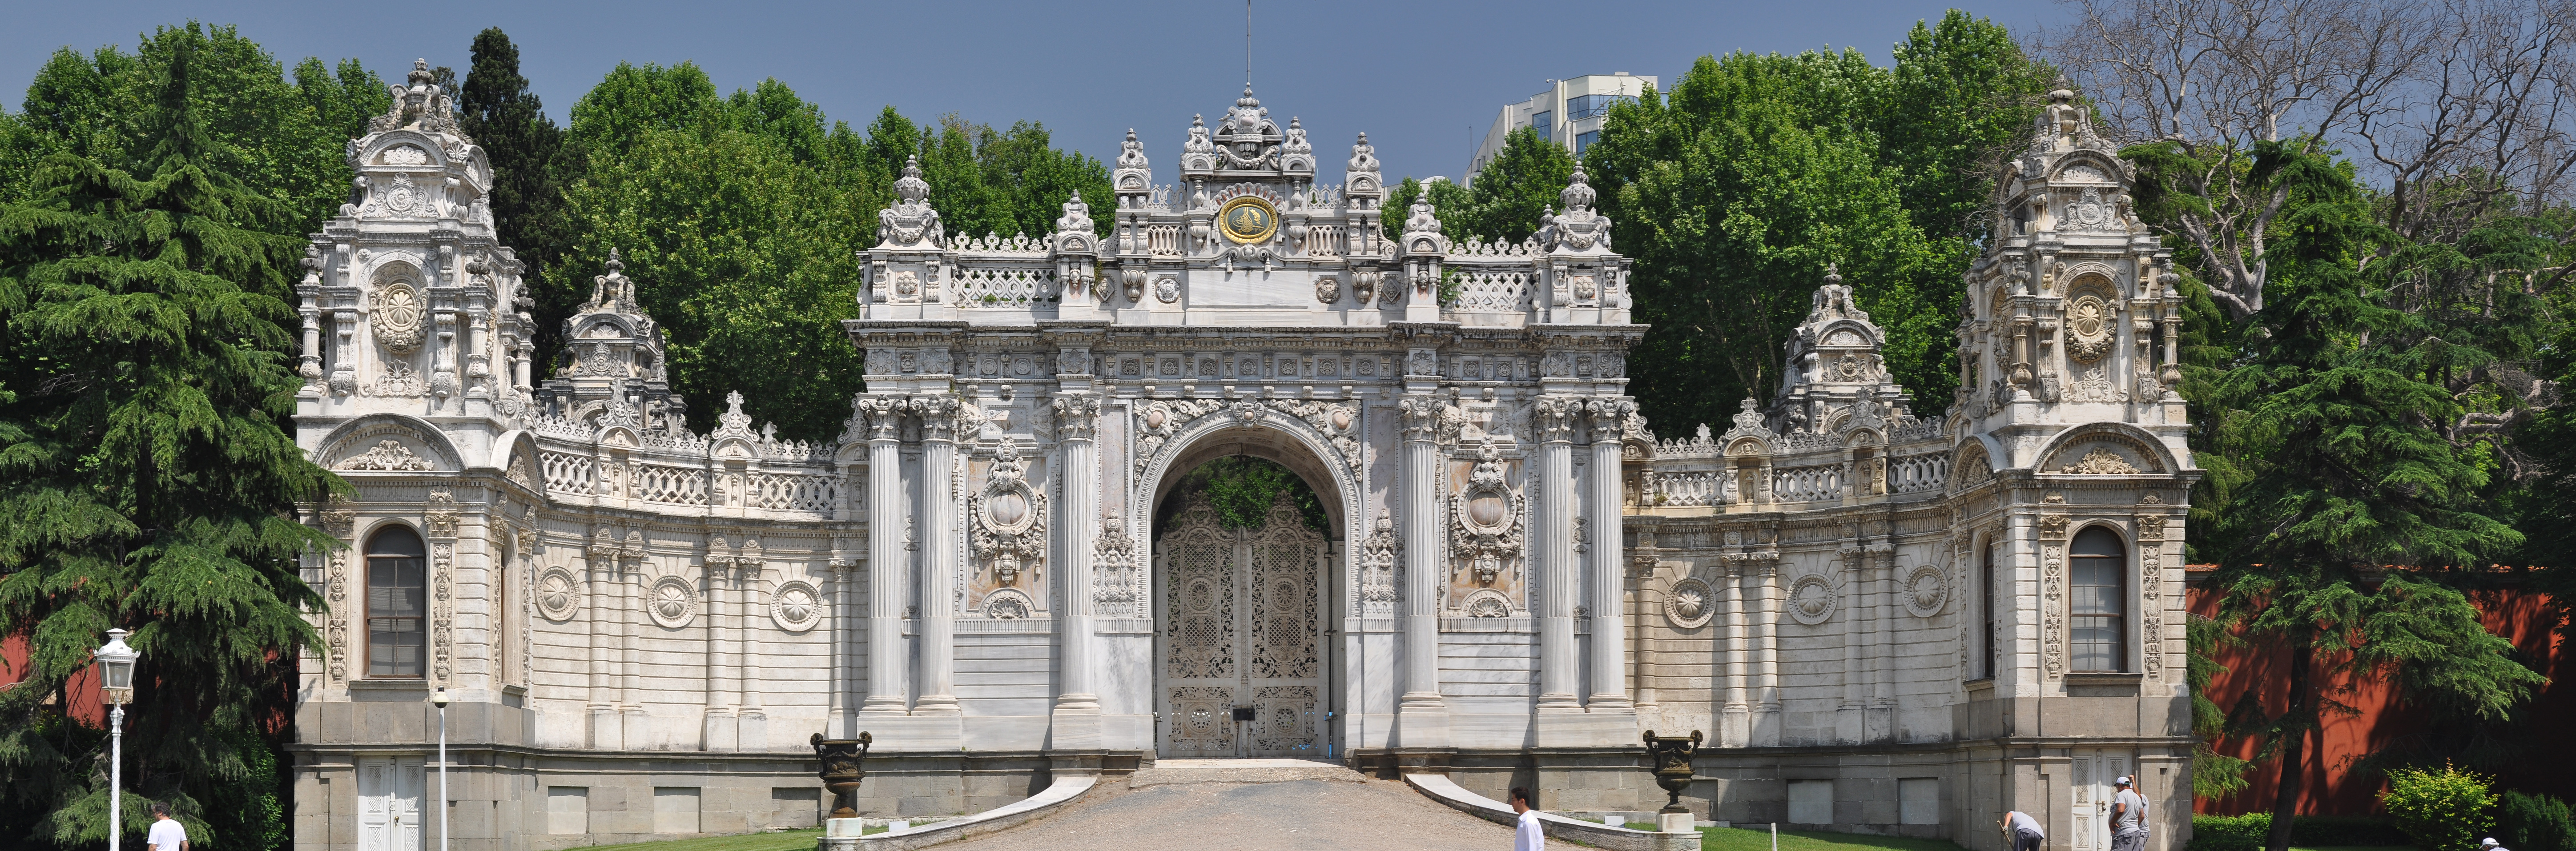 File:Treasury Gate, Dolmabahçe Palace, Istanbul, Turkey 002.jpg ...